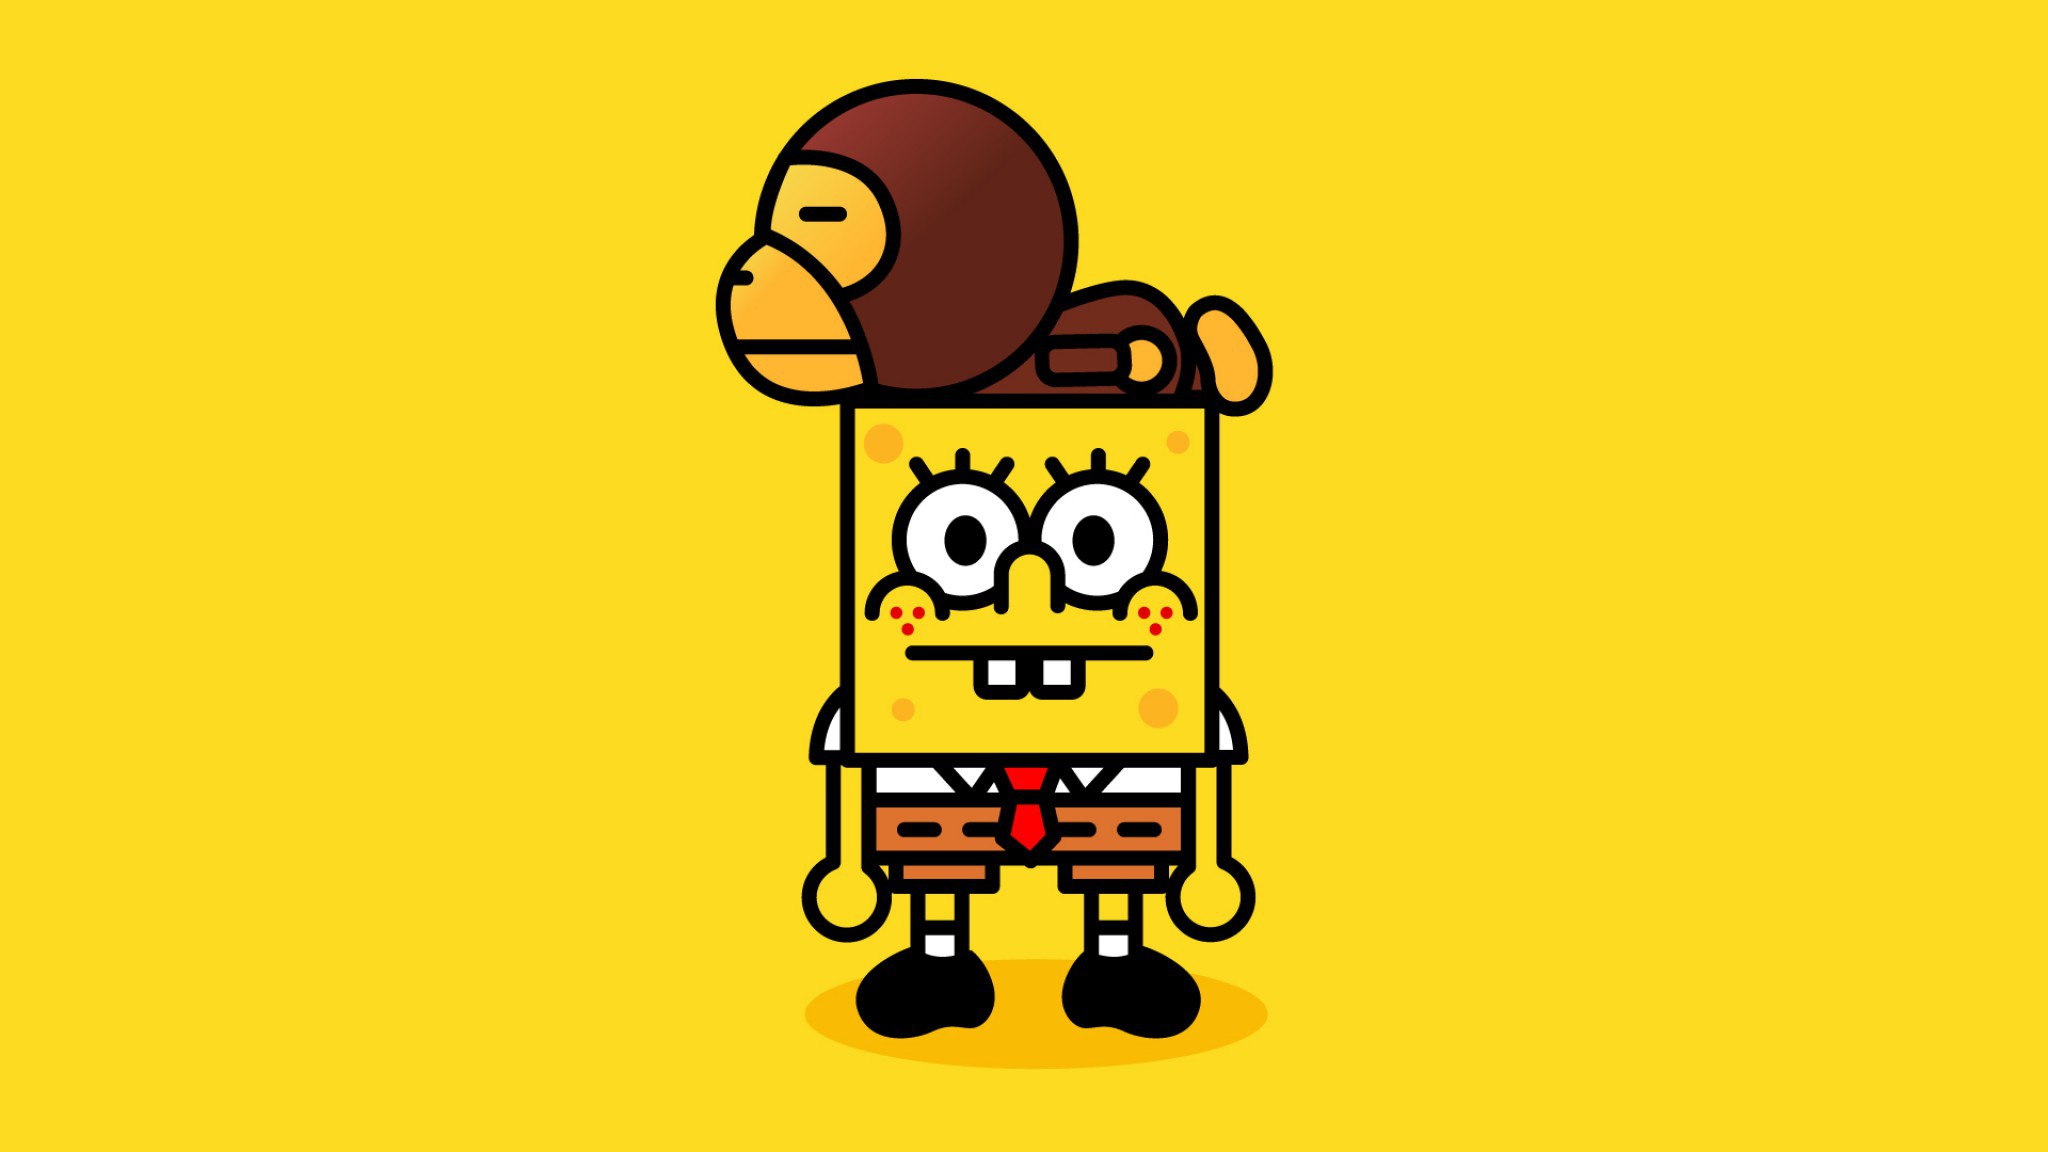 Spongebob Character Images - Curious George And Spongebob - HD Wallpaper 